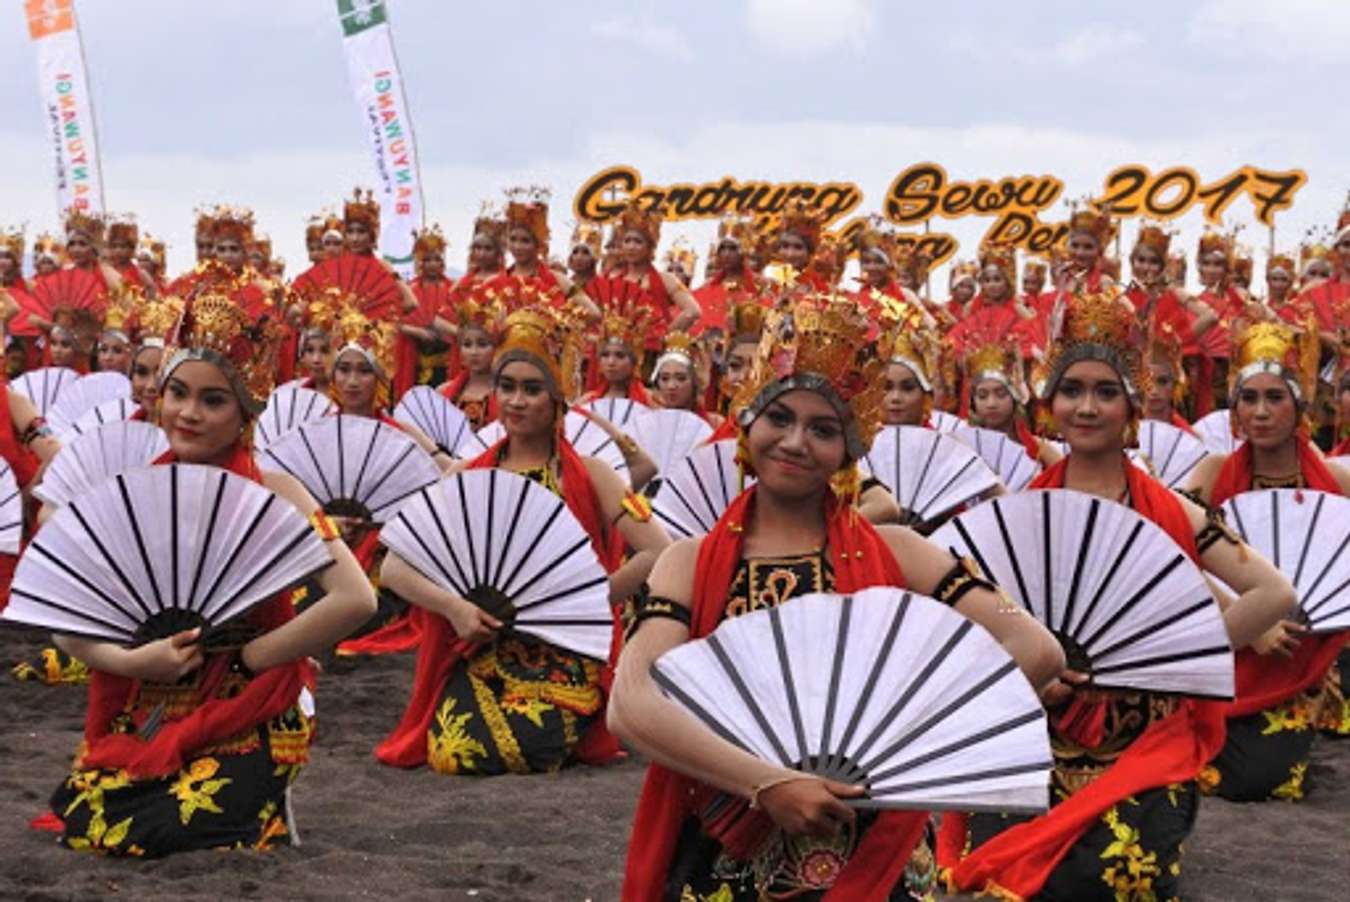 Festival Gandrung Sewu | Festival kebudayaan di Indonesia